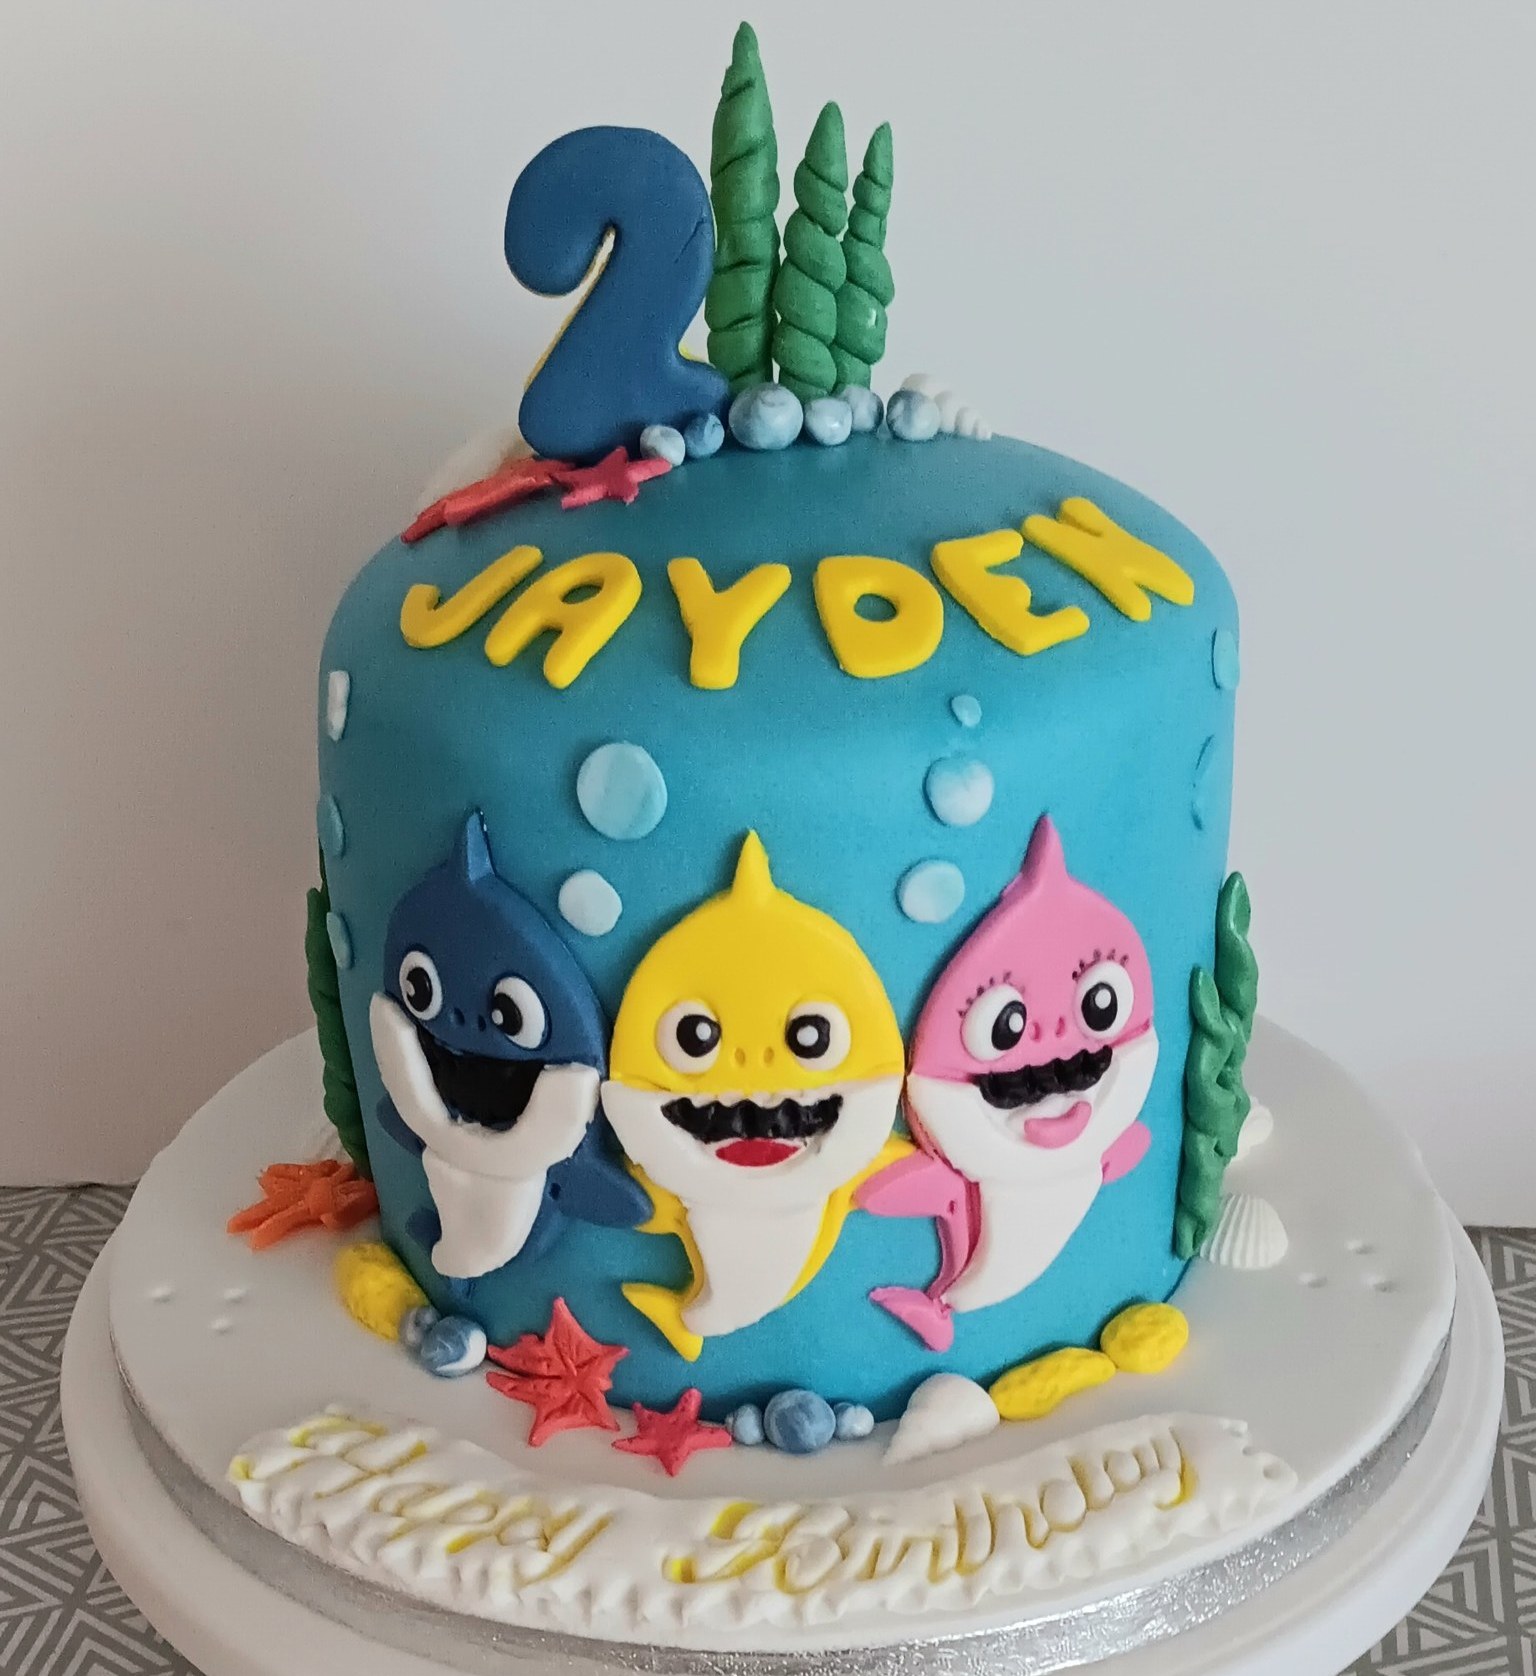 Boys "Baby shark" inspired birthday cake